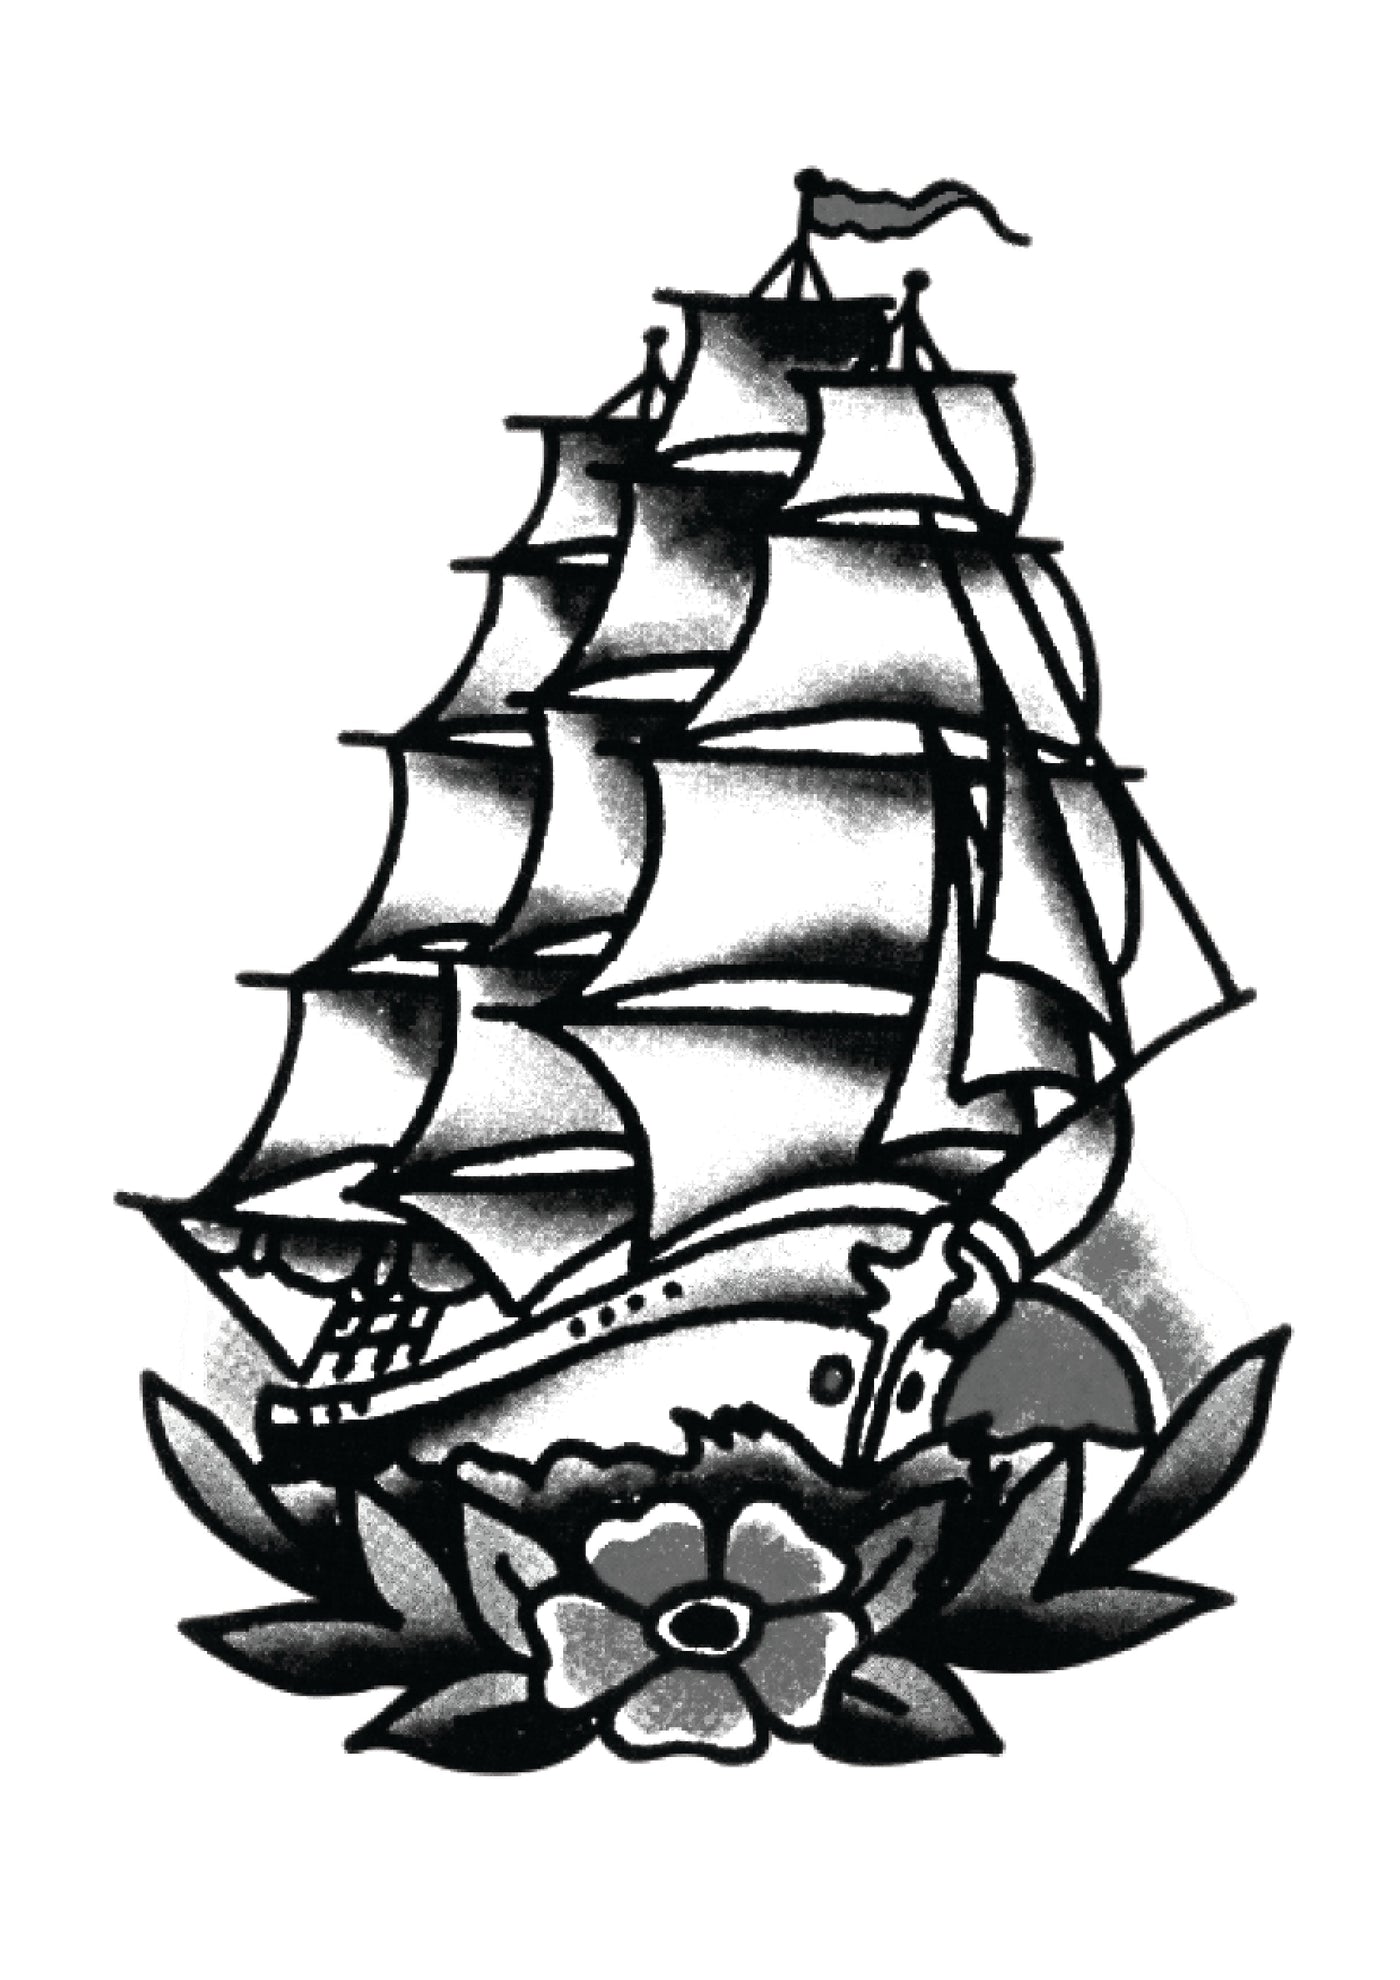 Sailor Jerry Sailing Ship - Temporary Tattoo